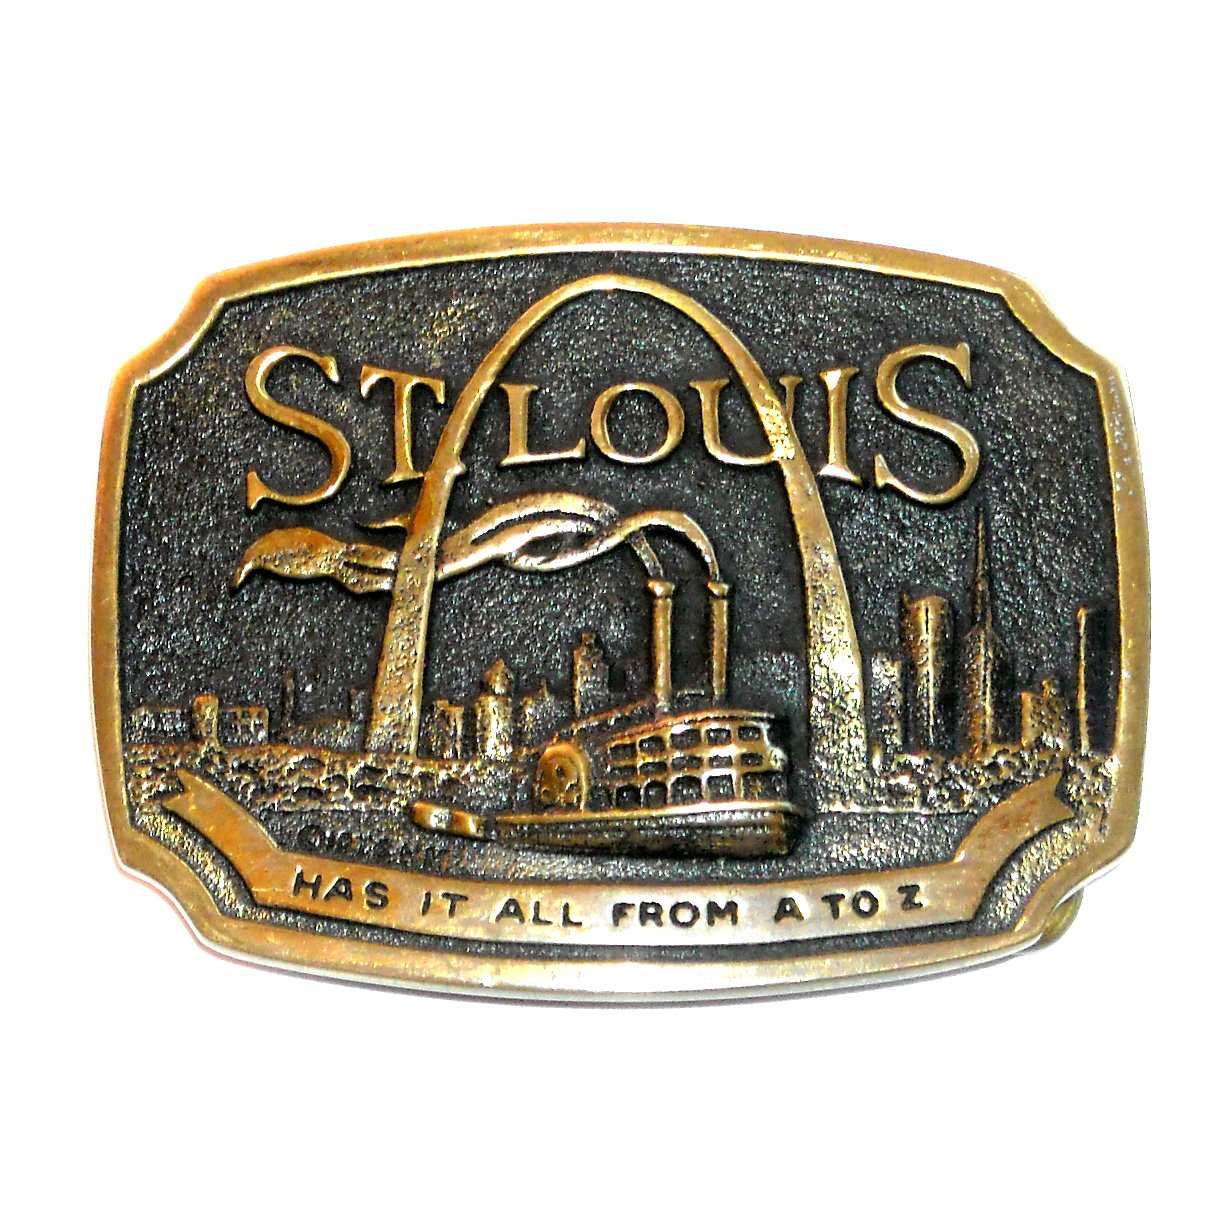 Belt Buckles for sale in St. Louis, Facebook Marketplace